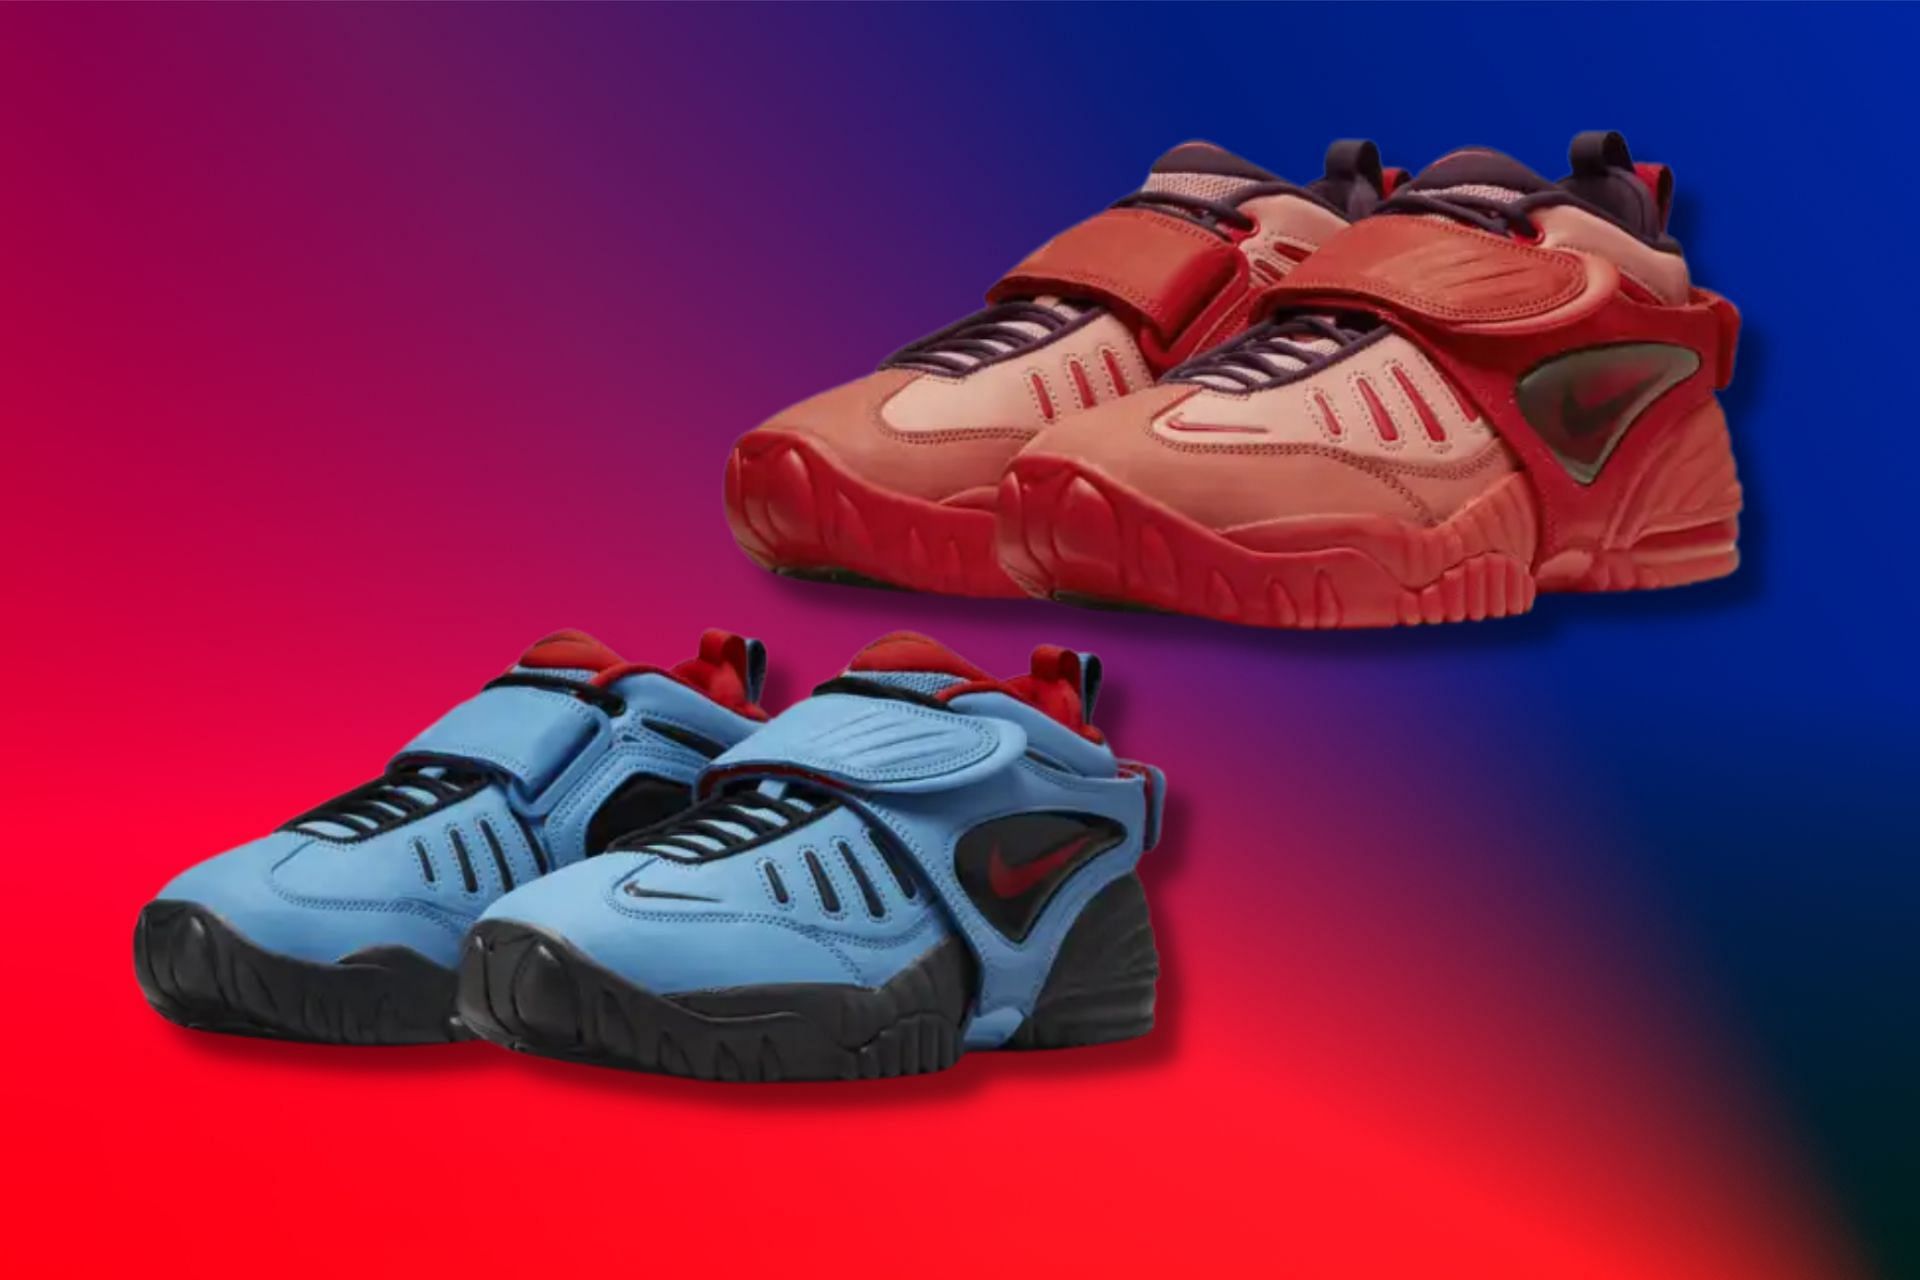 Ambush x Nike Air Adjust Force sneakers (Image via Nike)